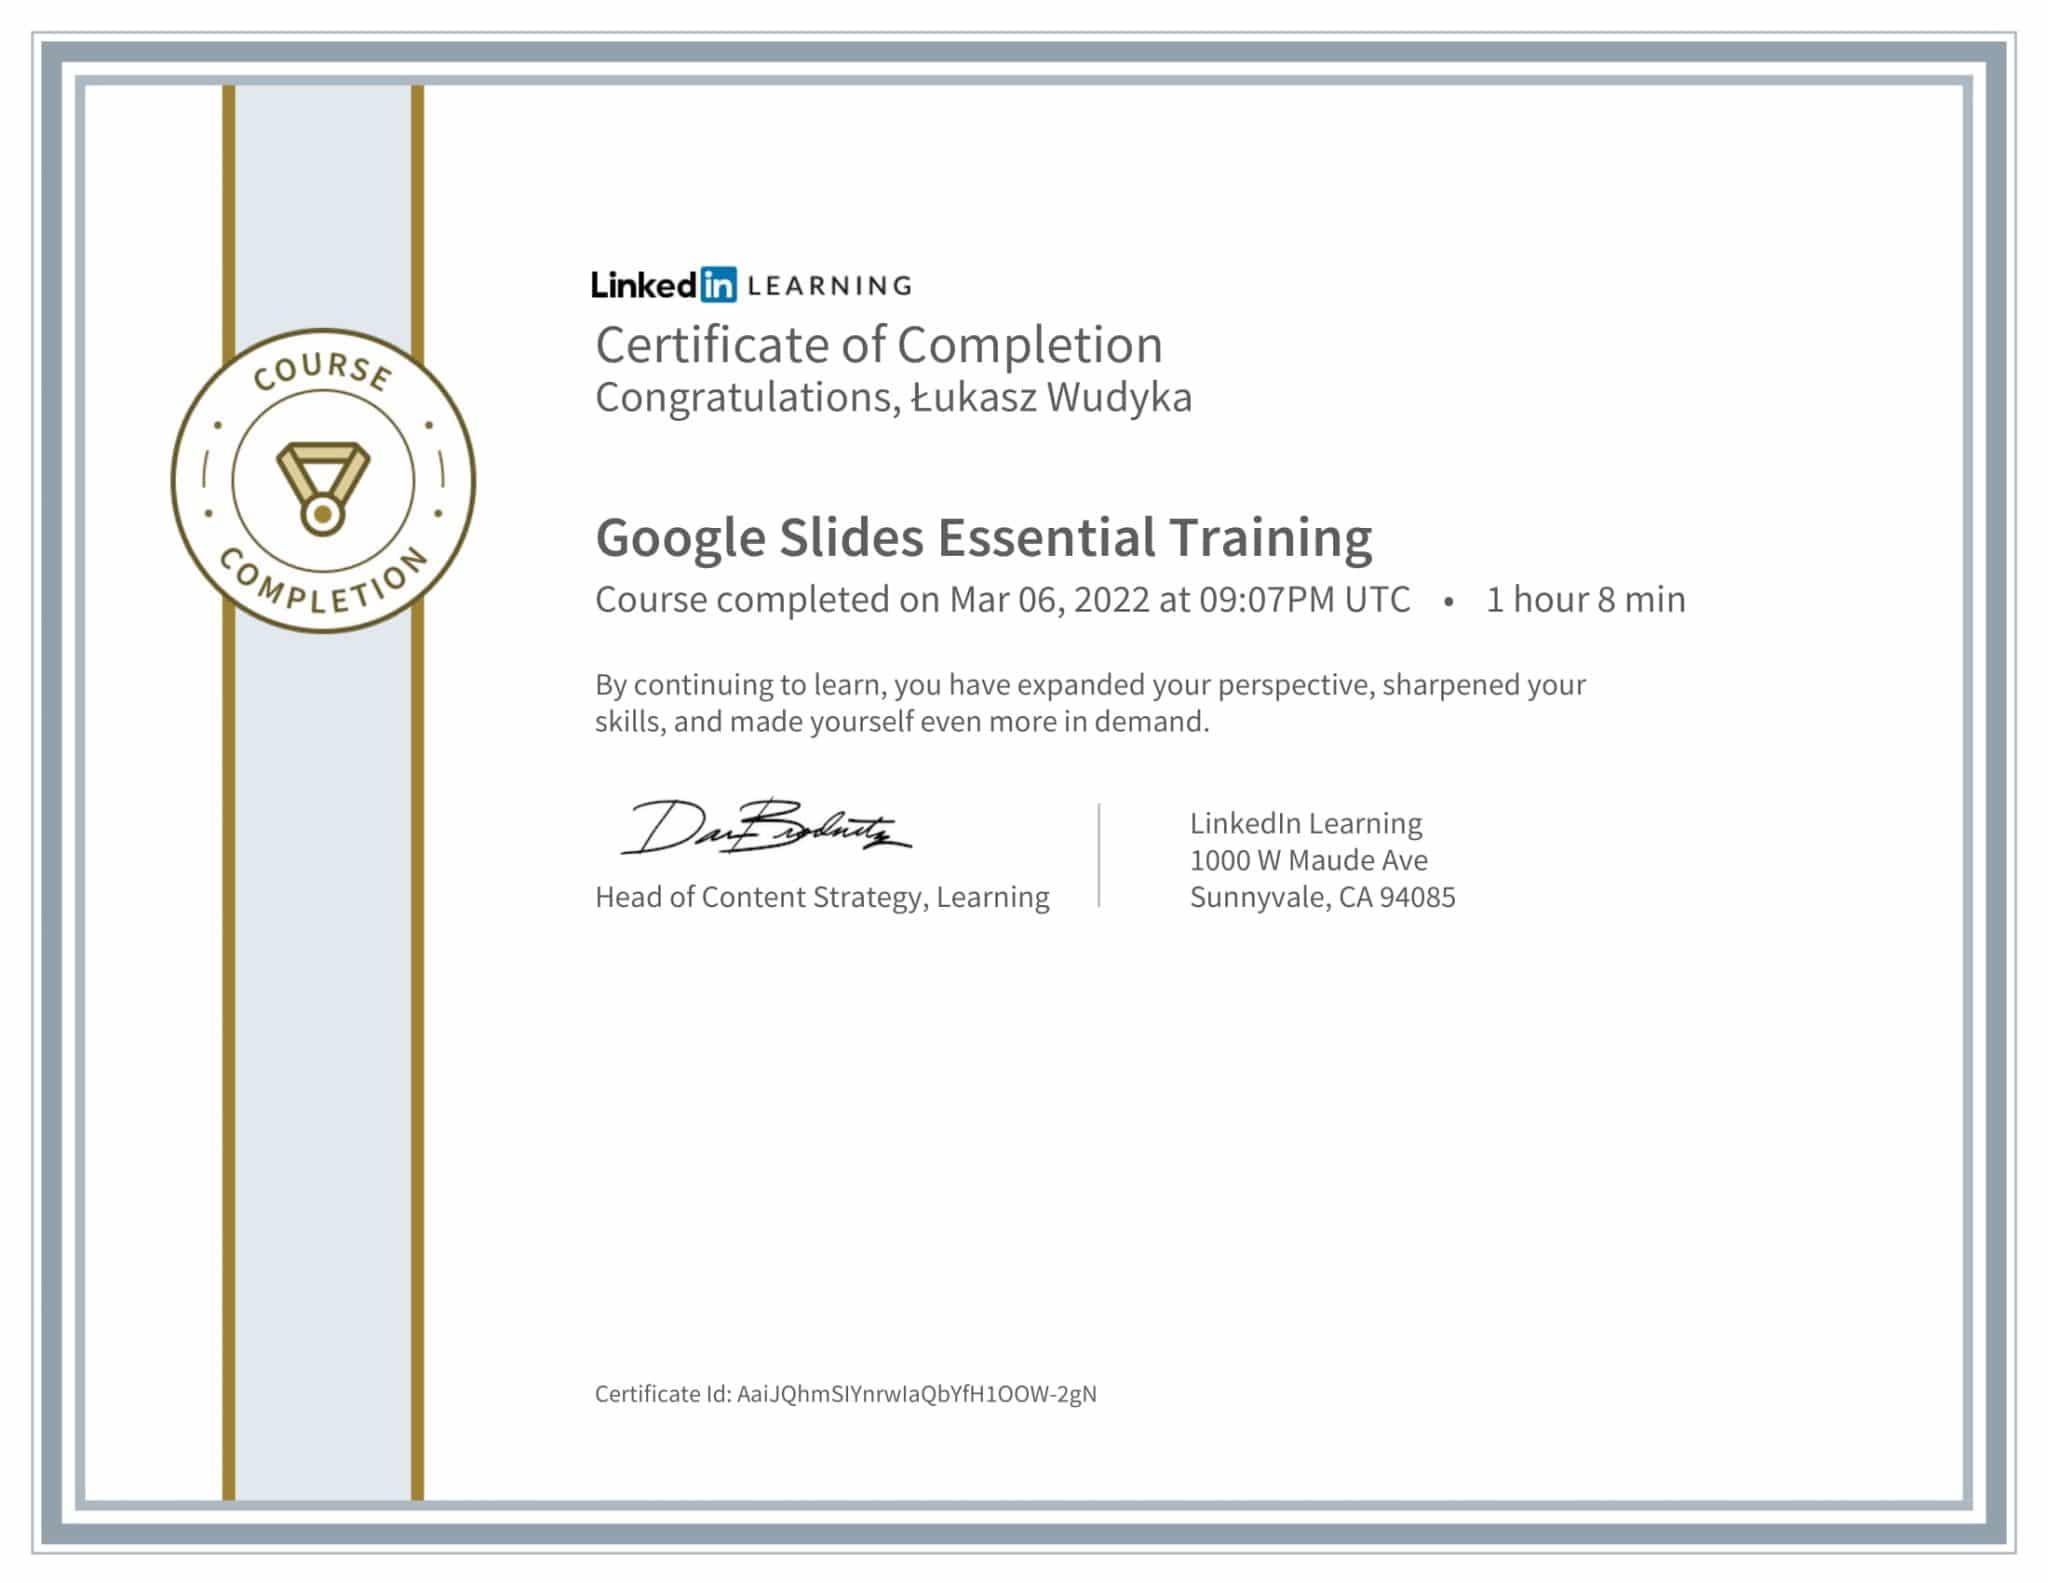 CertificateOfCompletion_Google Slides Essential Training-1